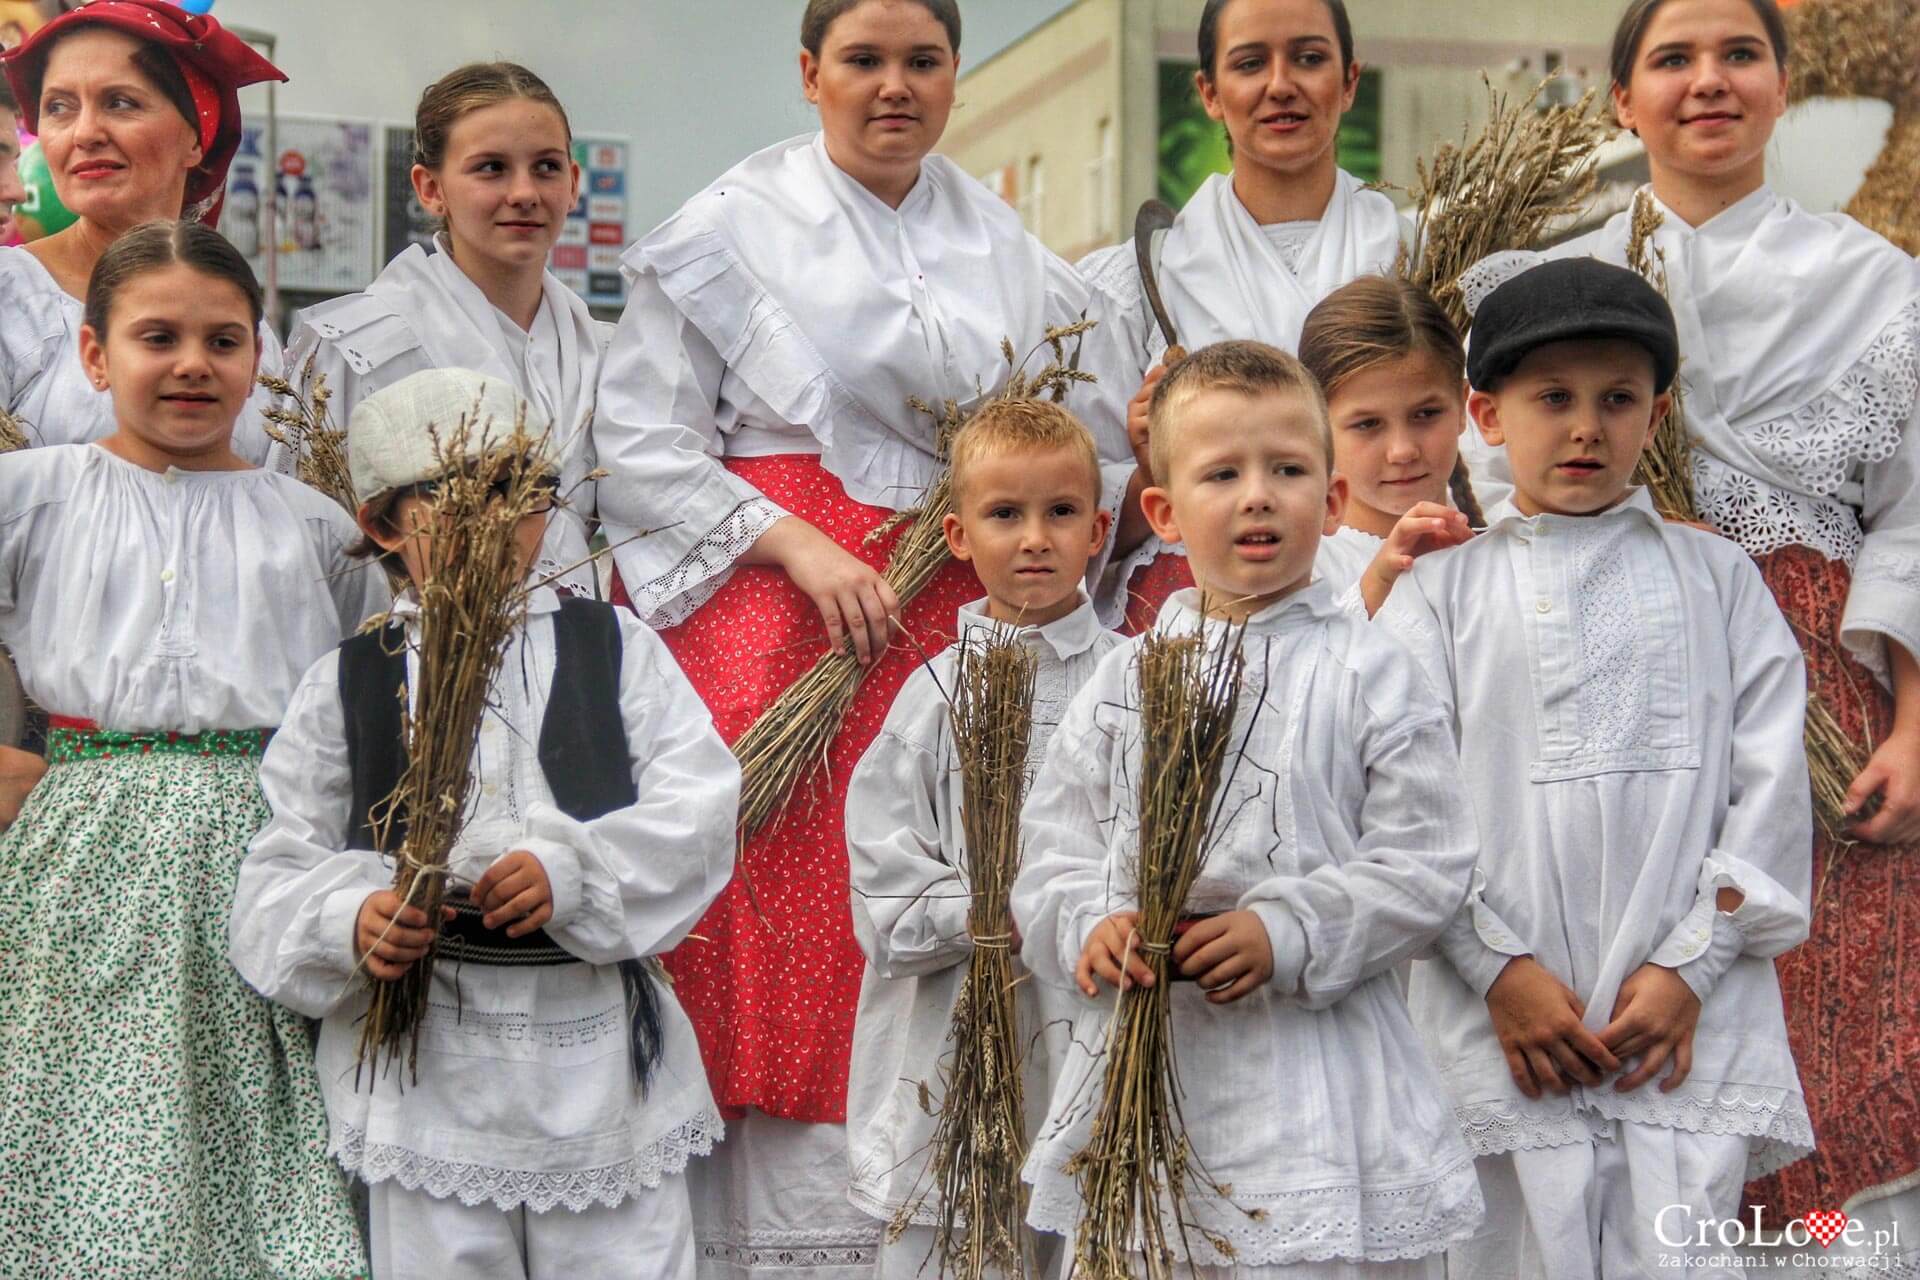 Festiwal Vinkovačke Jeseni w Vinkovci